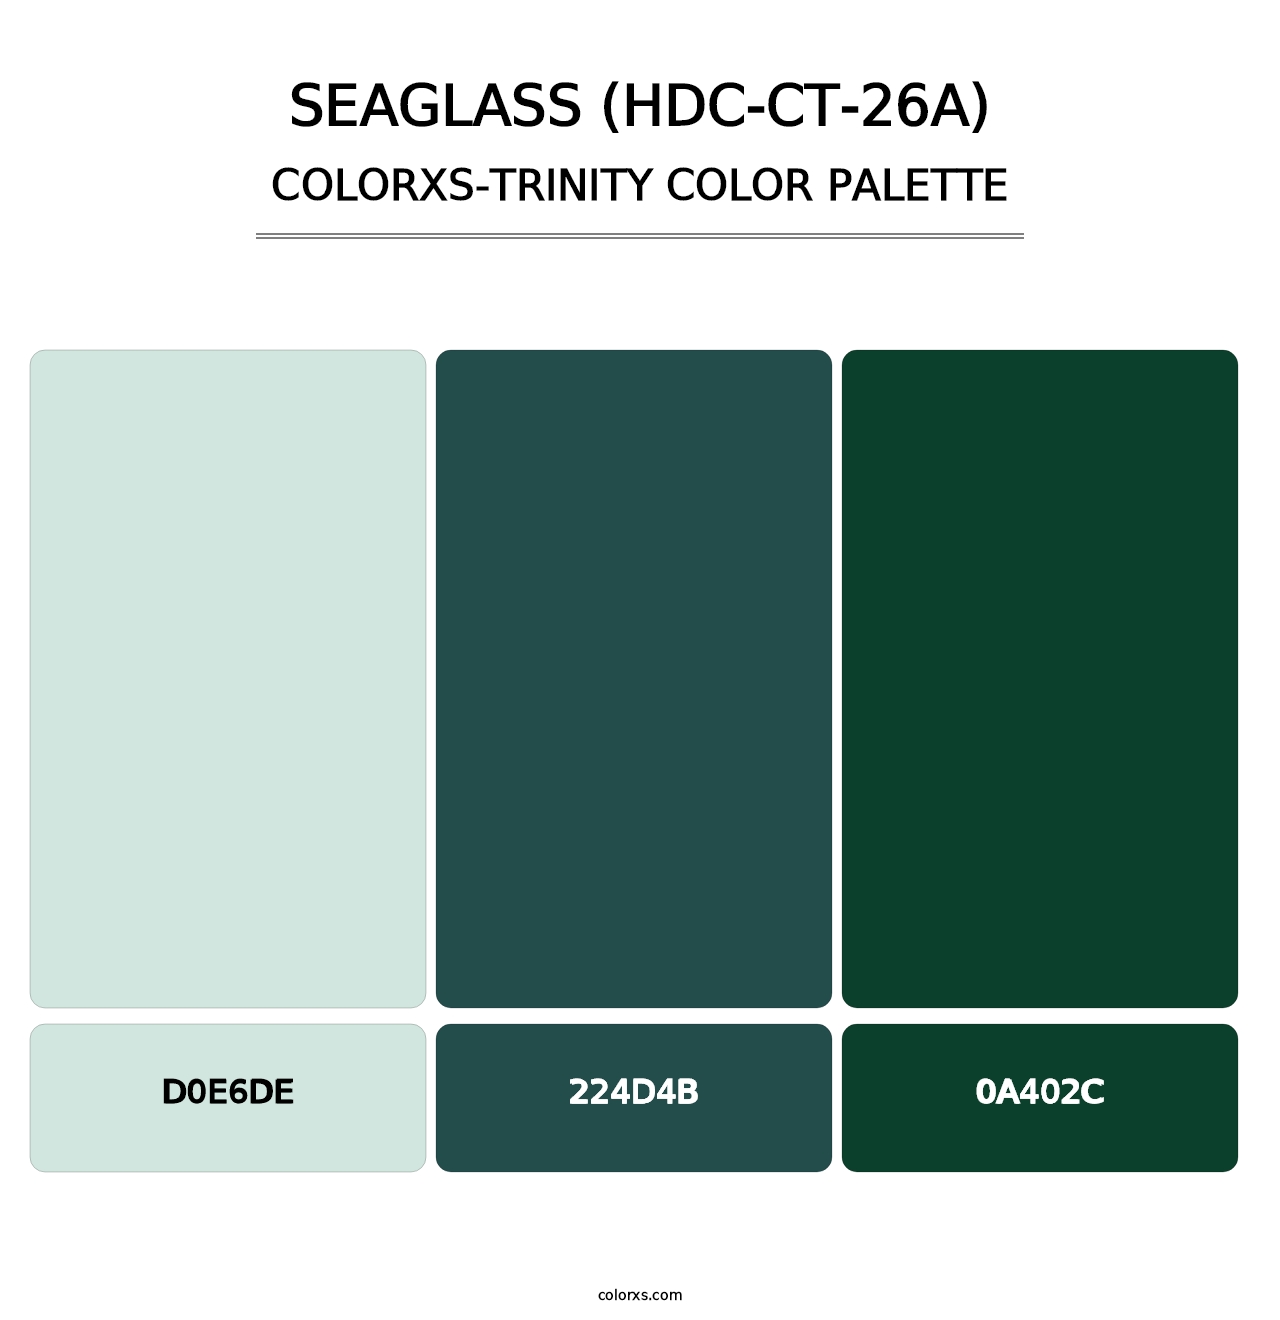 Seaglass (HDC-CT-26A) - Colorxs Trinity Palette